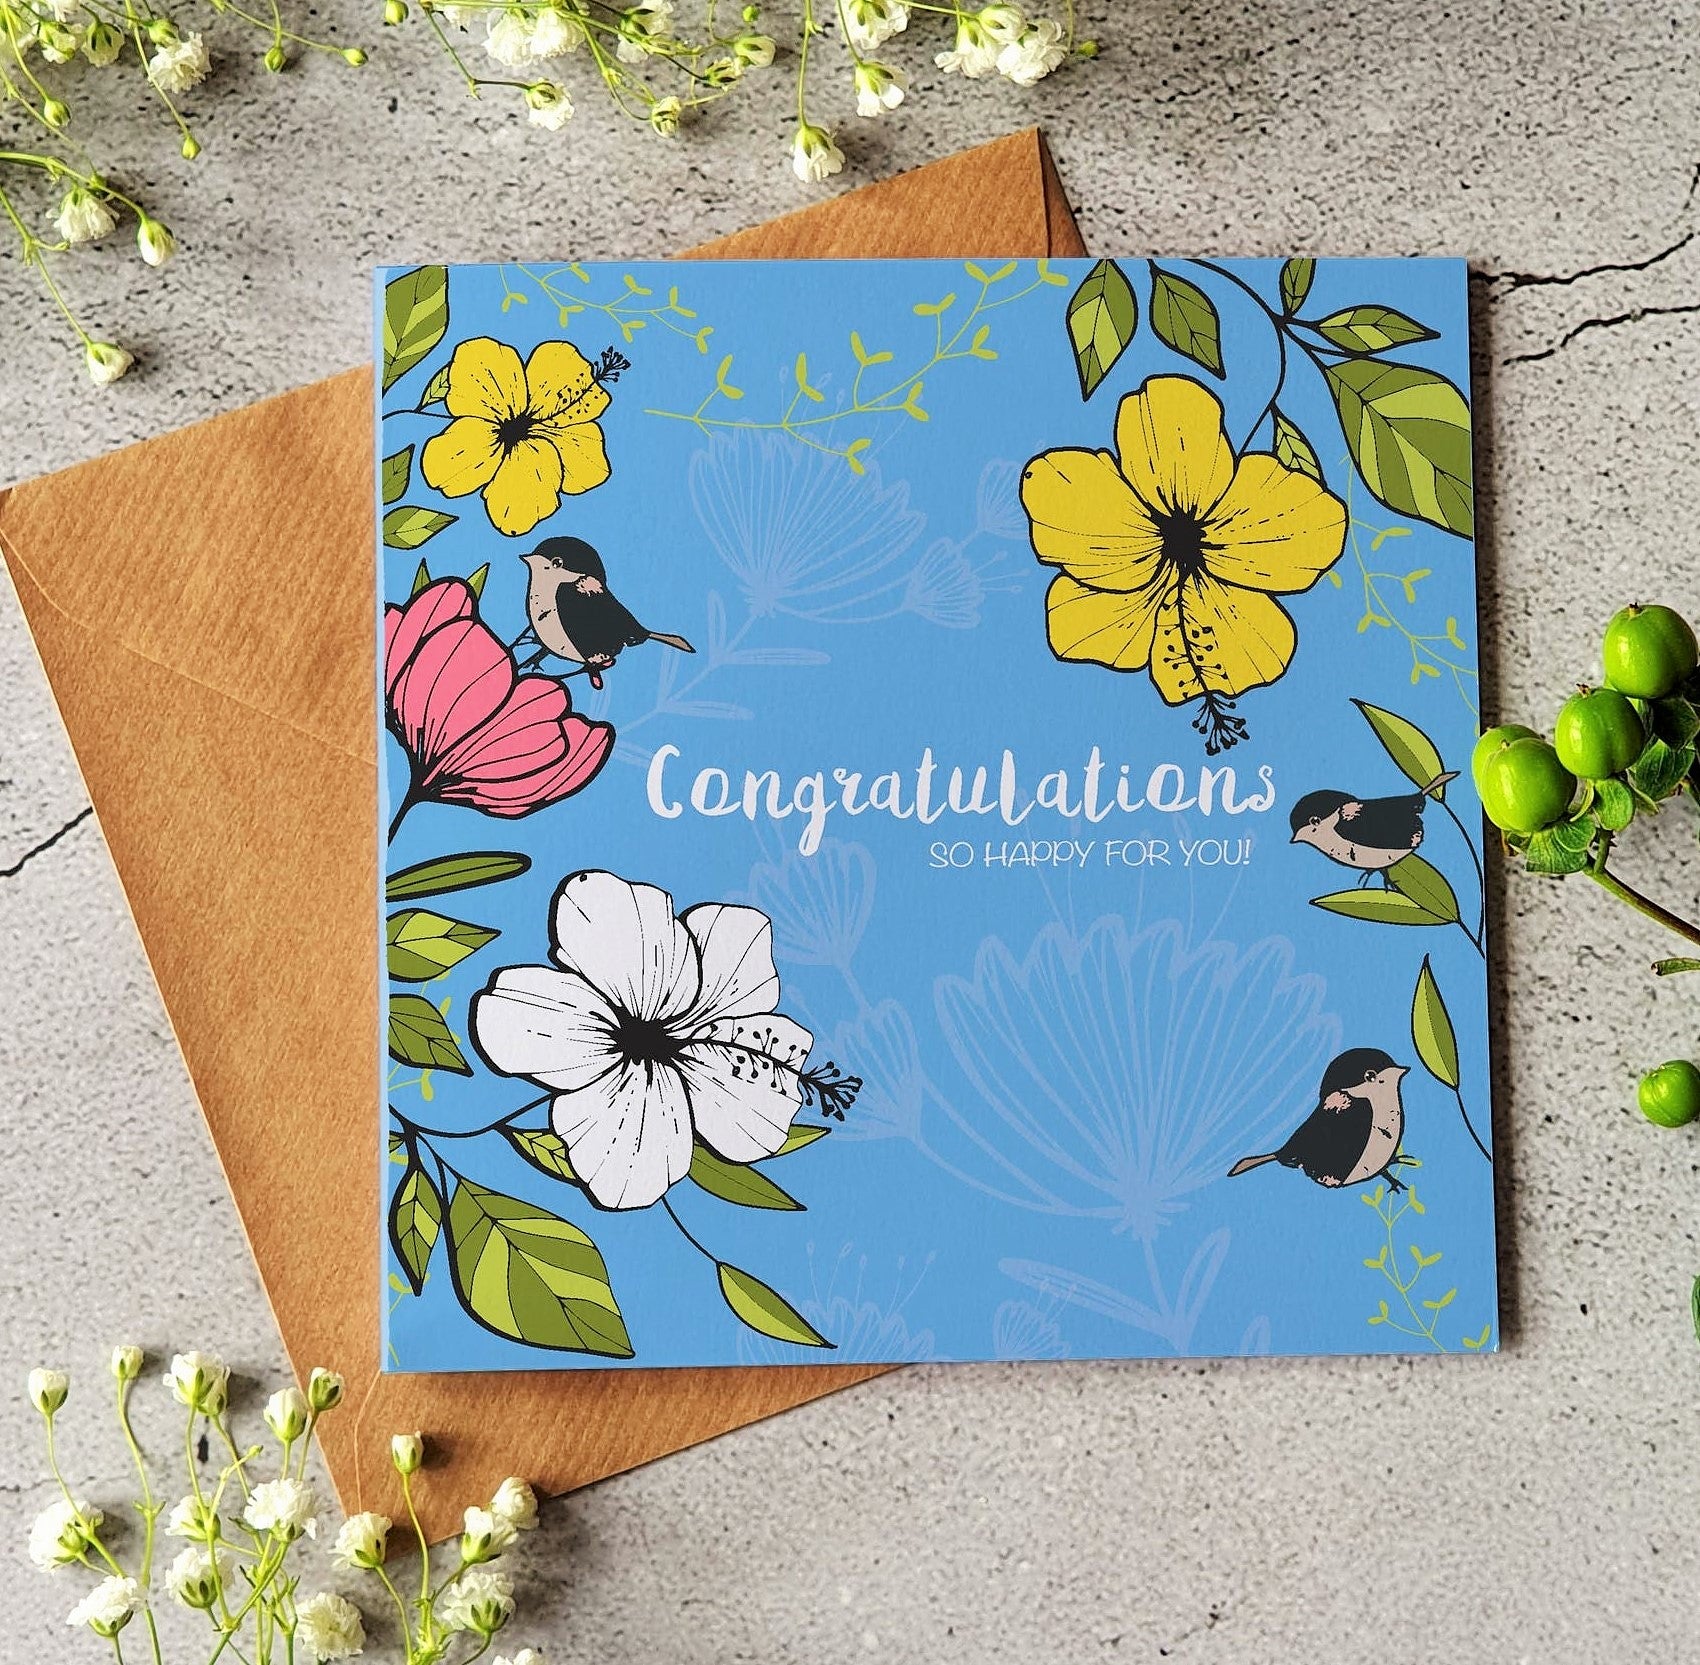 Congratulations - So Happy For You Card (Blue) designed by Ilana Ewing